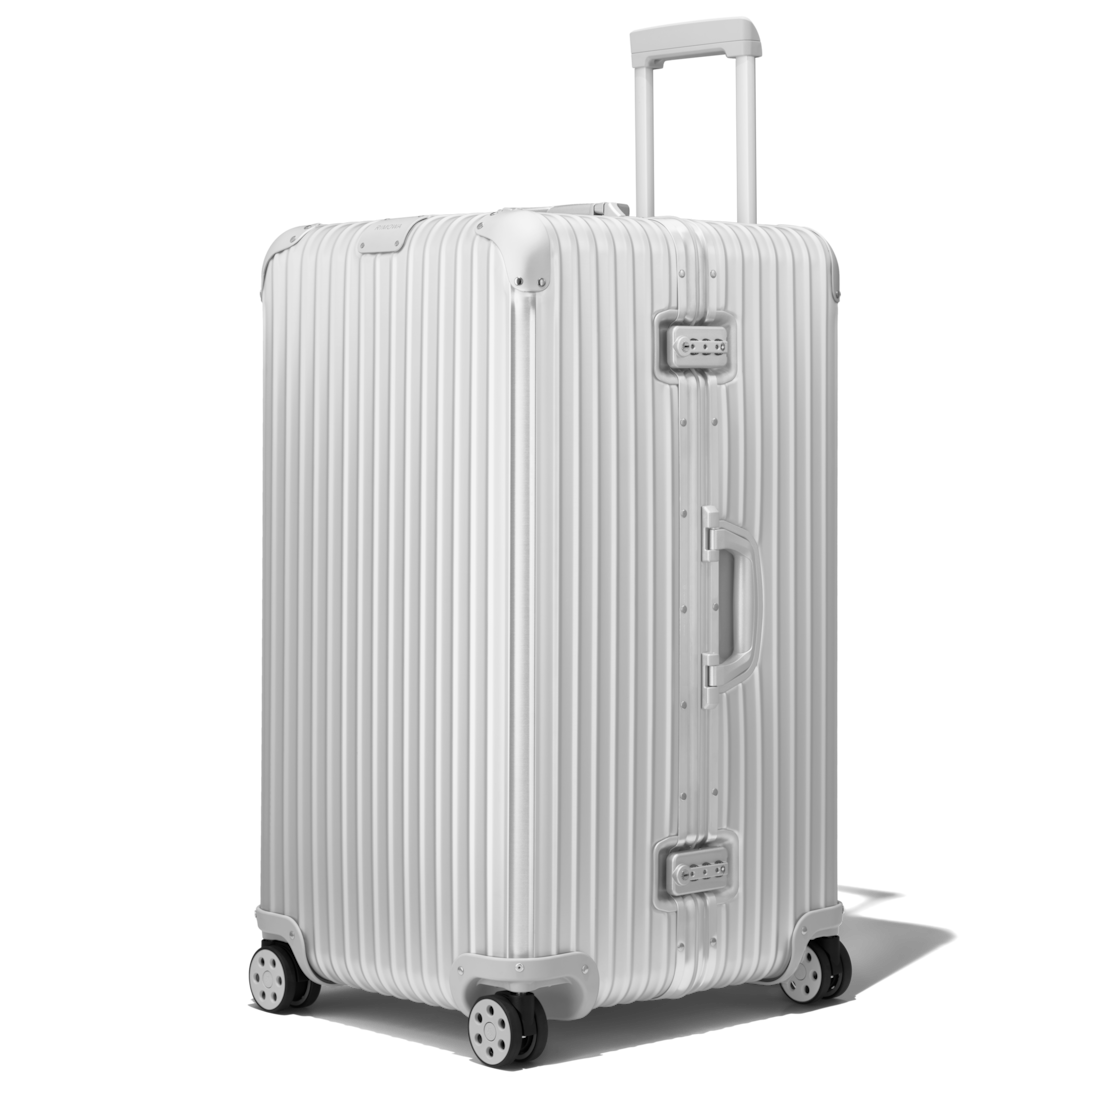 rimowa luggage large